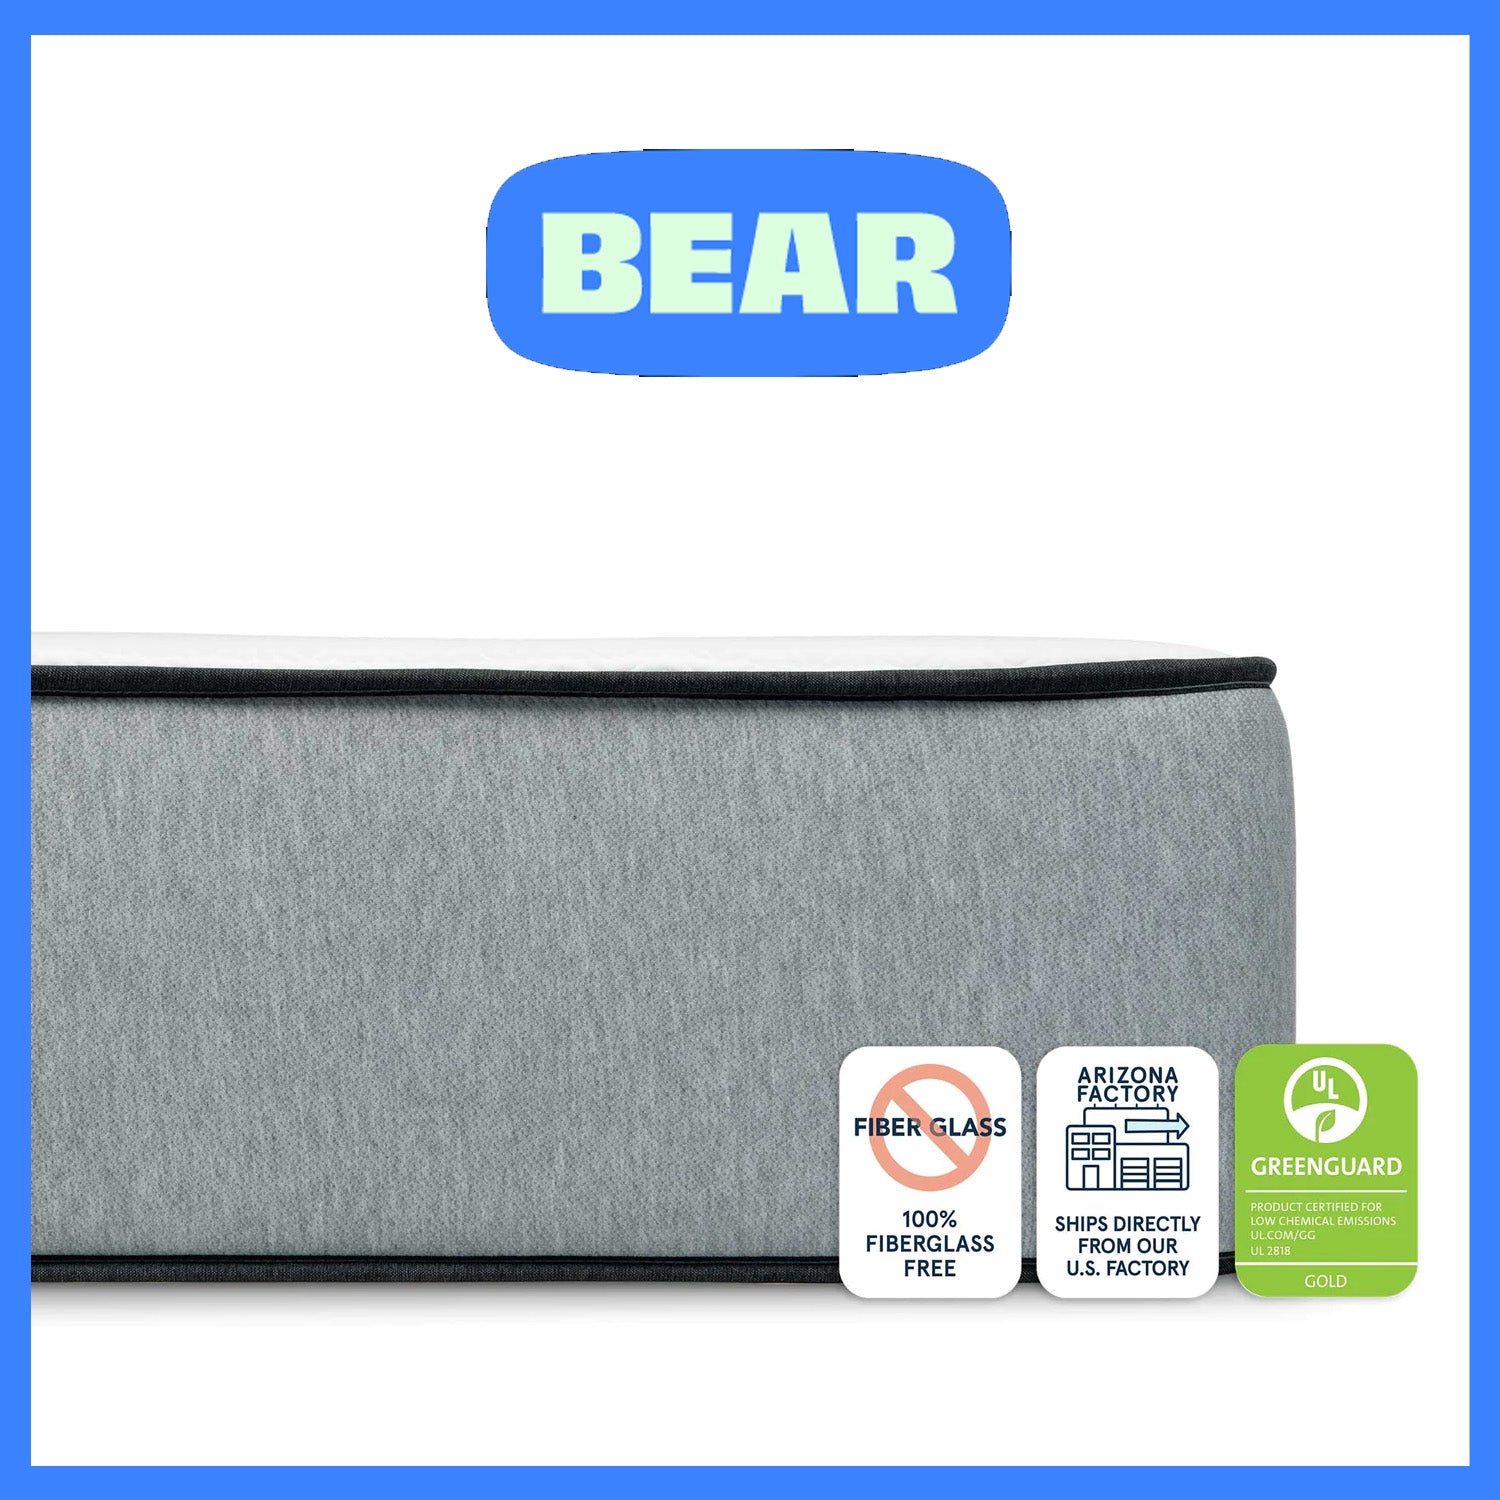 Bear Pro Hybrid Mattress